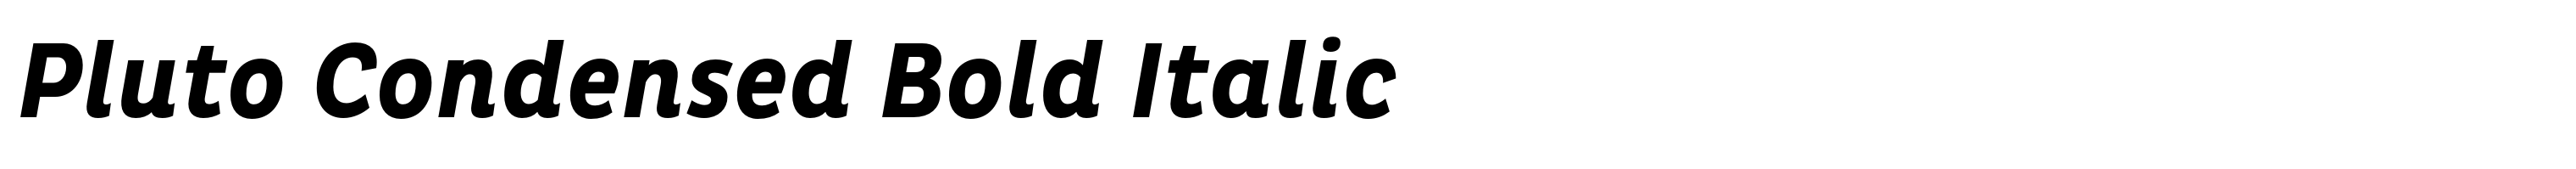 Pluto Condensed Bold Italic